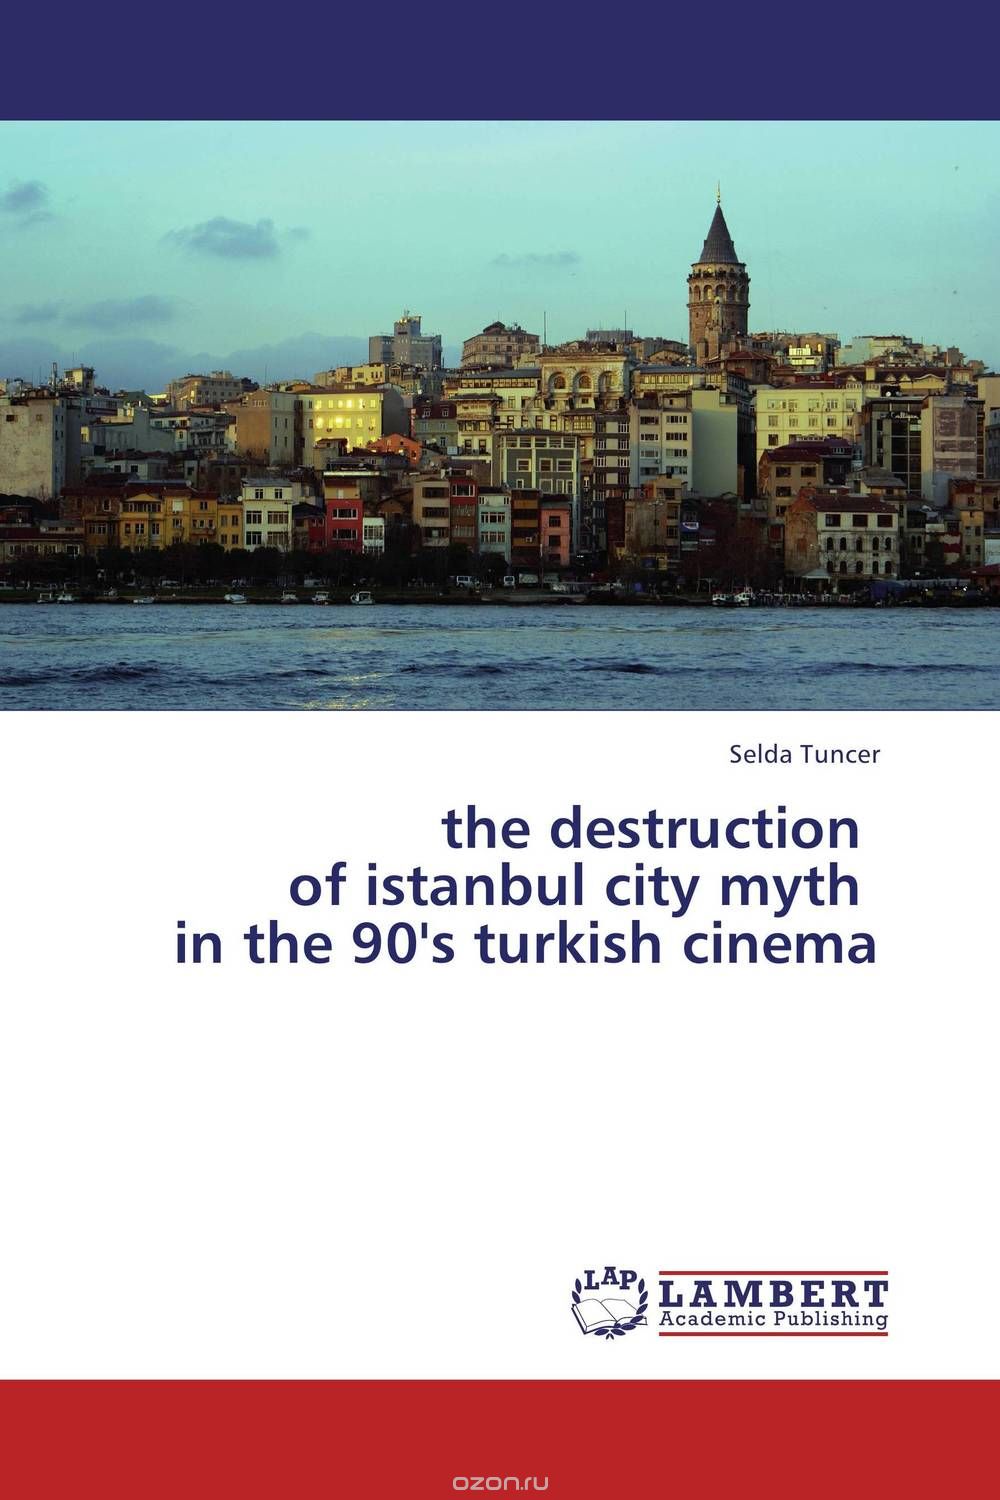 Скачать книгу "the destruction   of istanbul city myth   in the 90's turkish cinema"